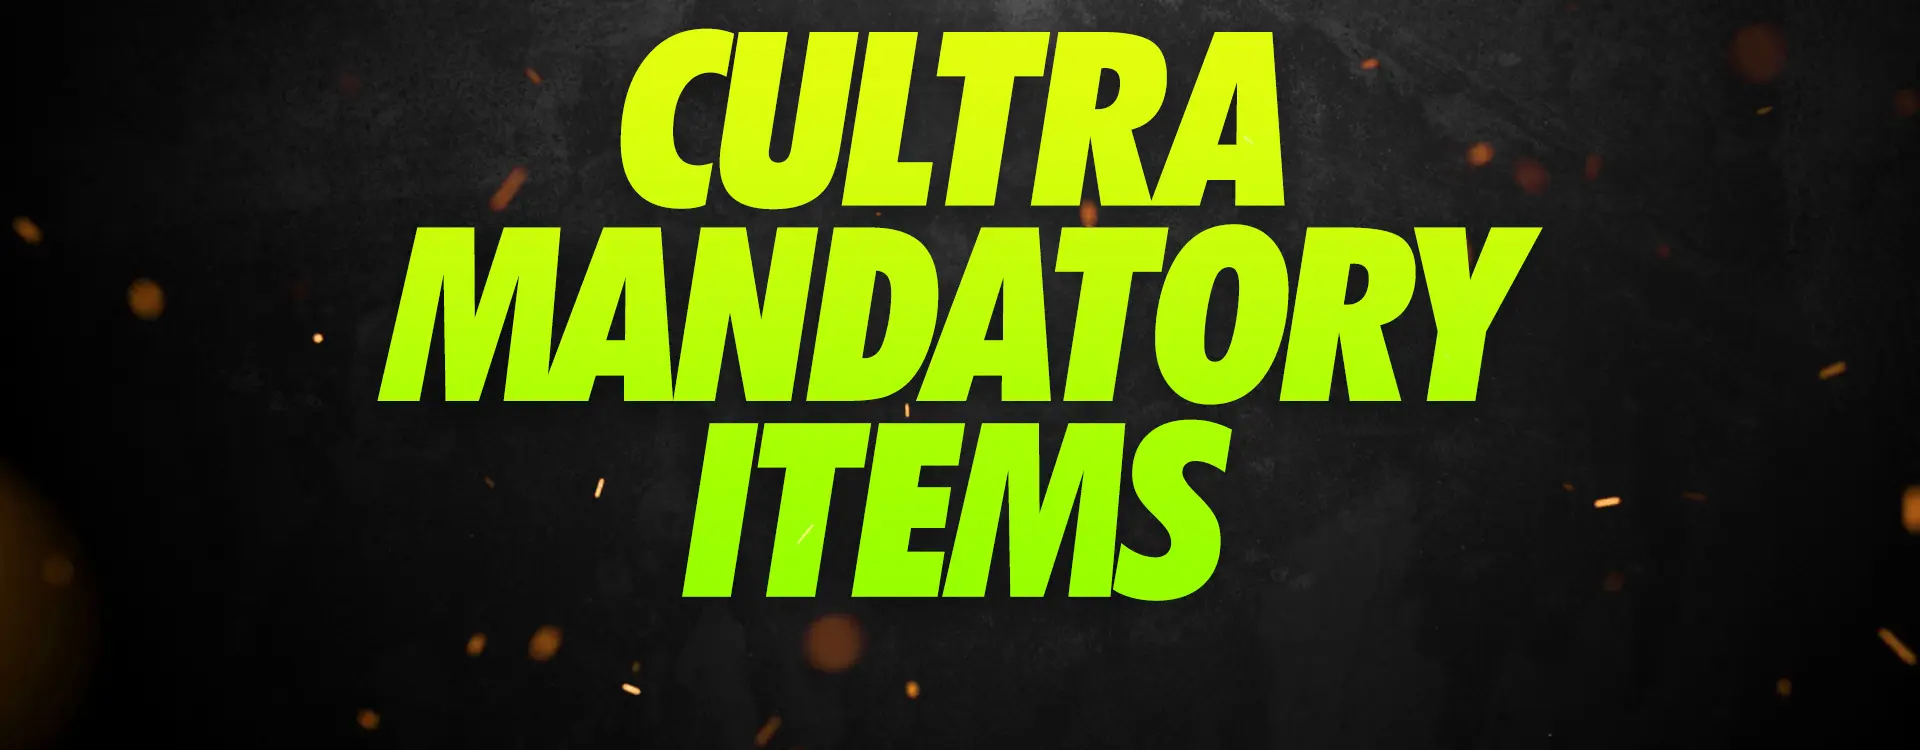 CULTRA Mandatory Items, PTT Outdoor, CULT,